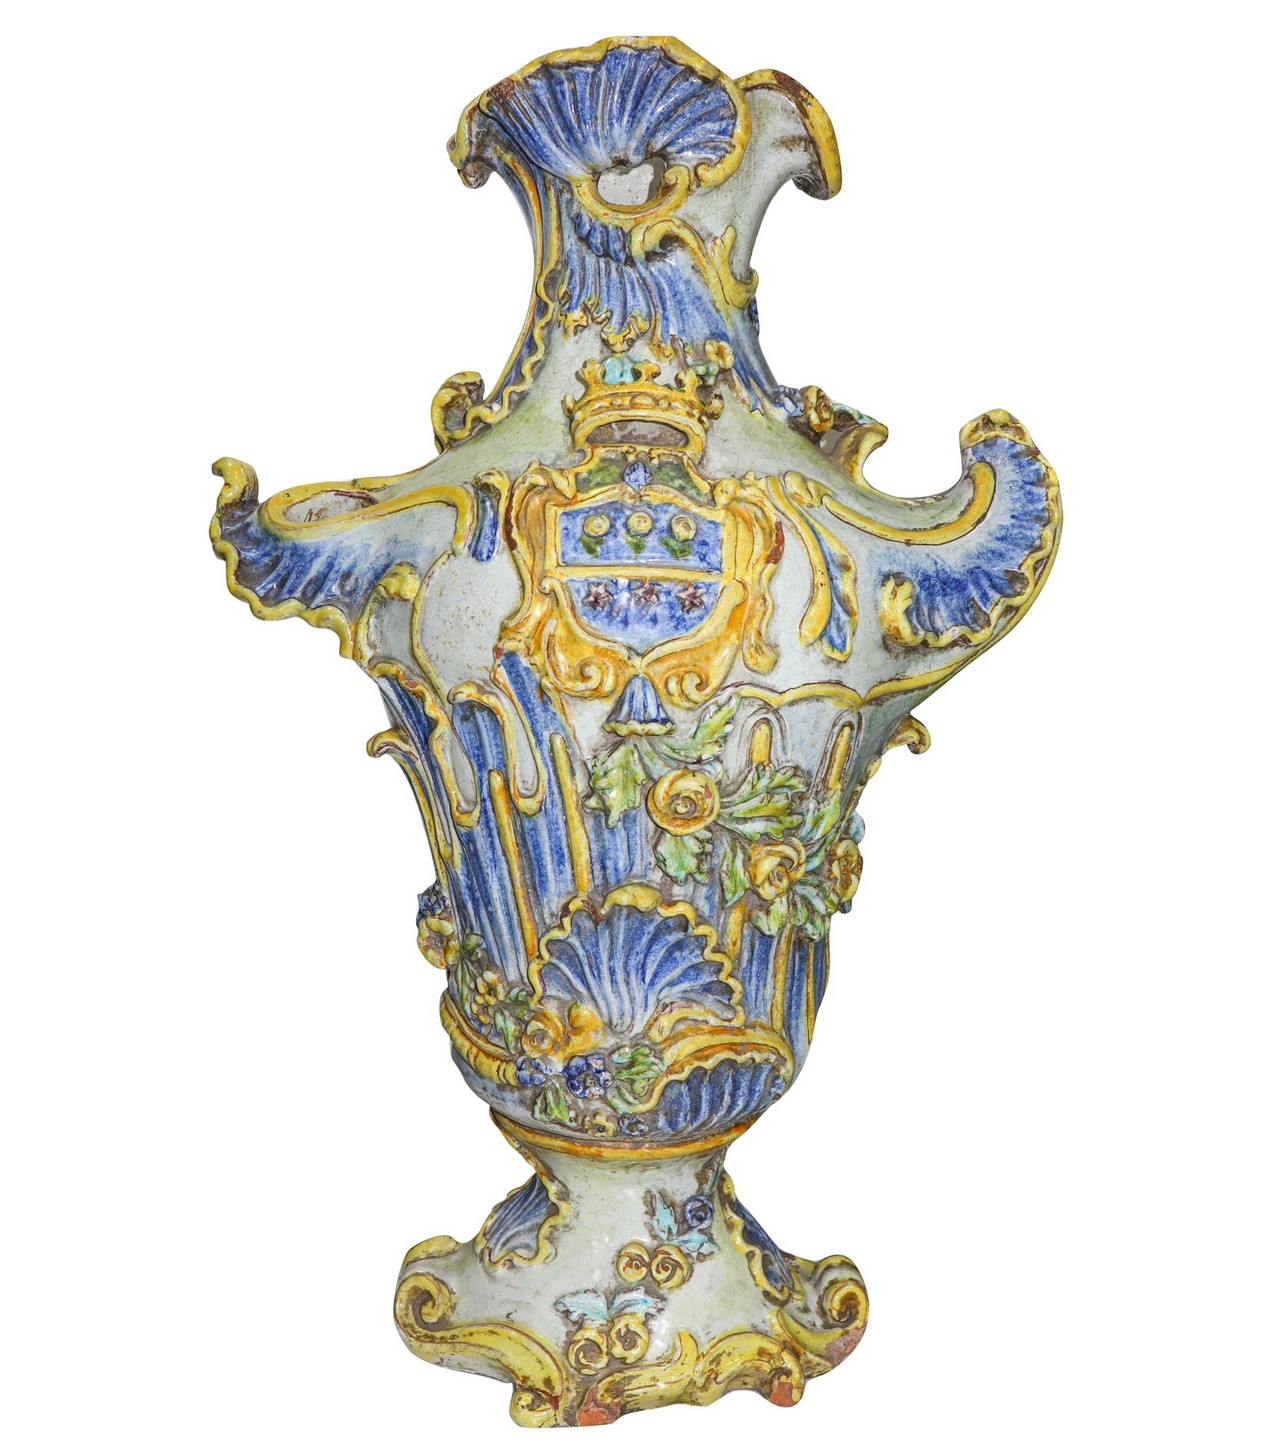 Ornamental vase in polychrome majolica from Caltagirone, published in Ragona, 18th century